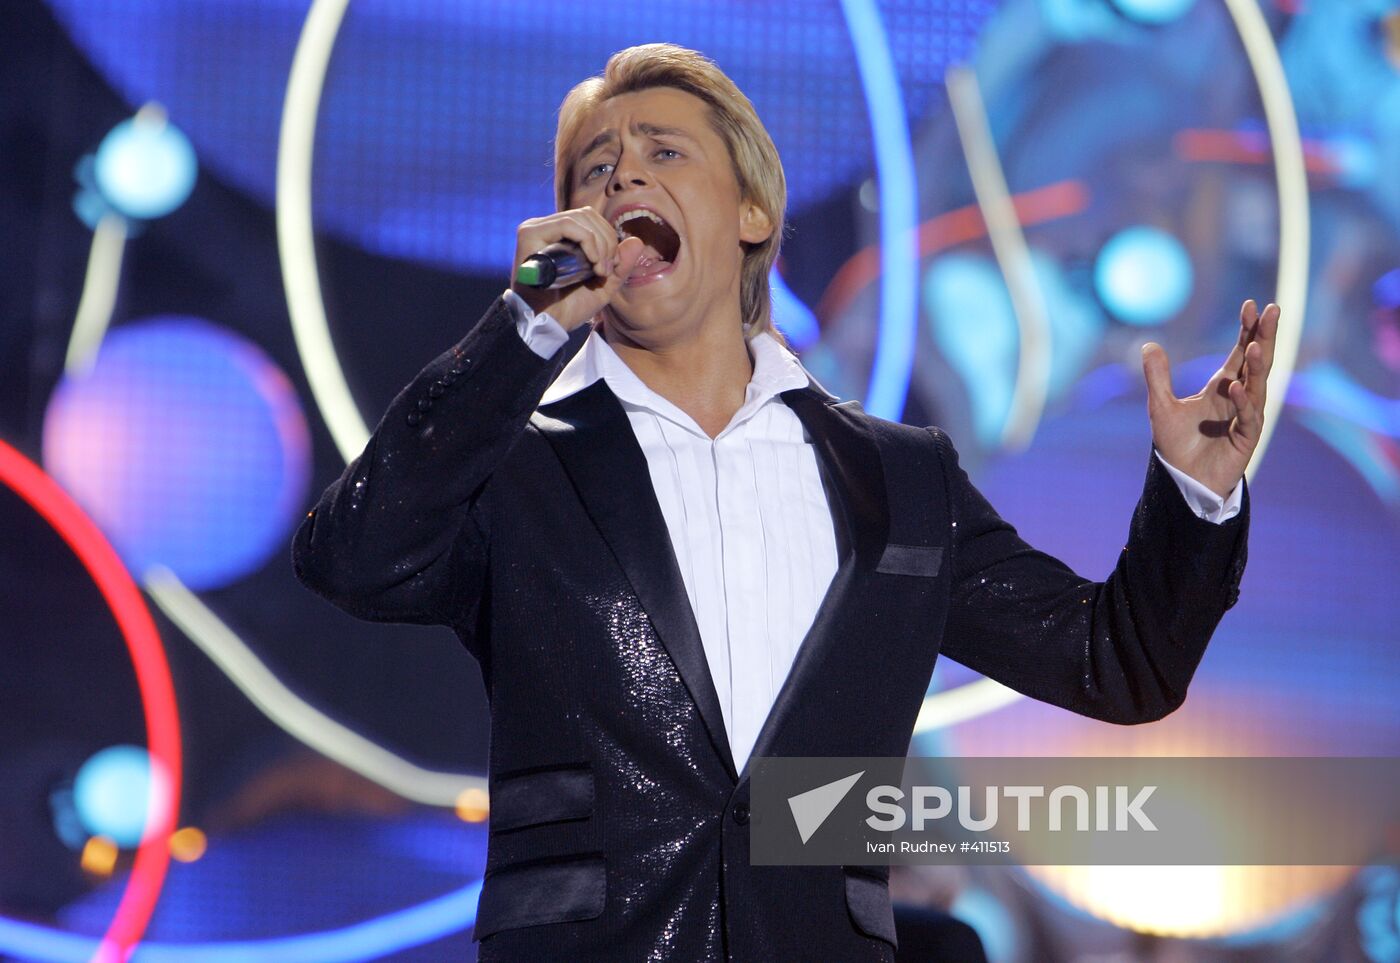 Russian singer Dmitry Danilenko